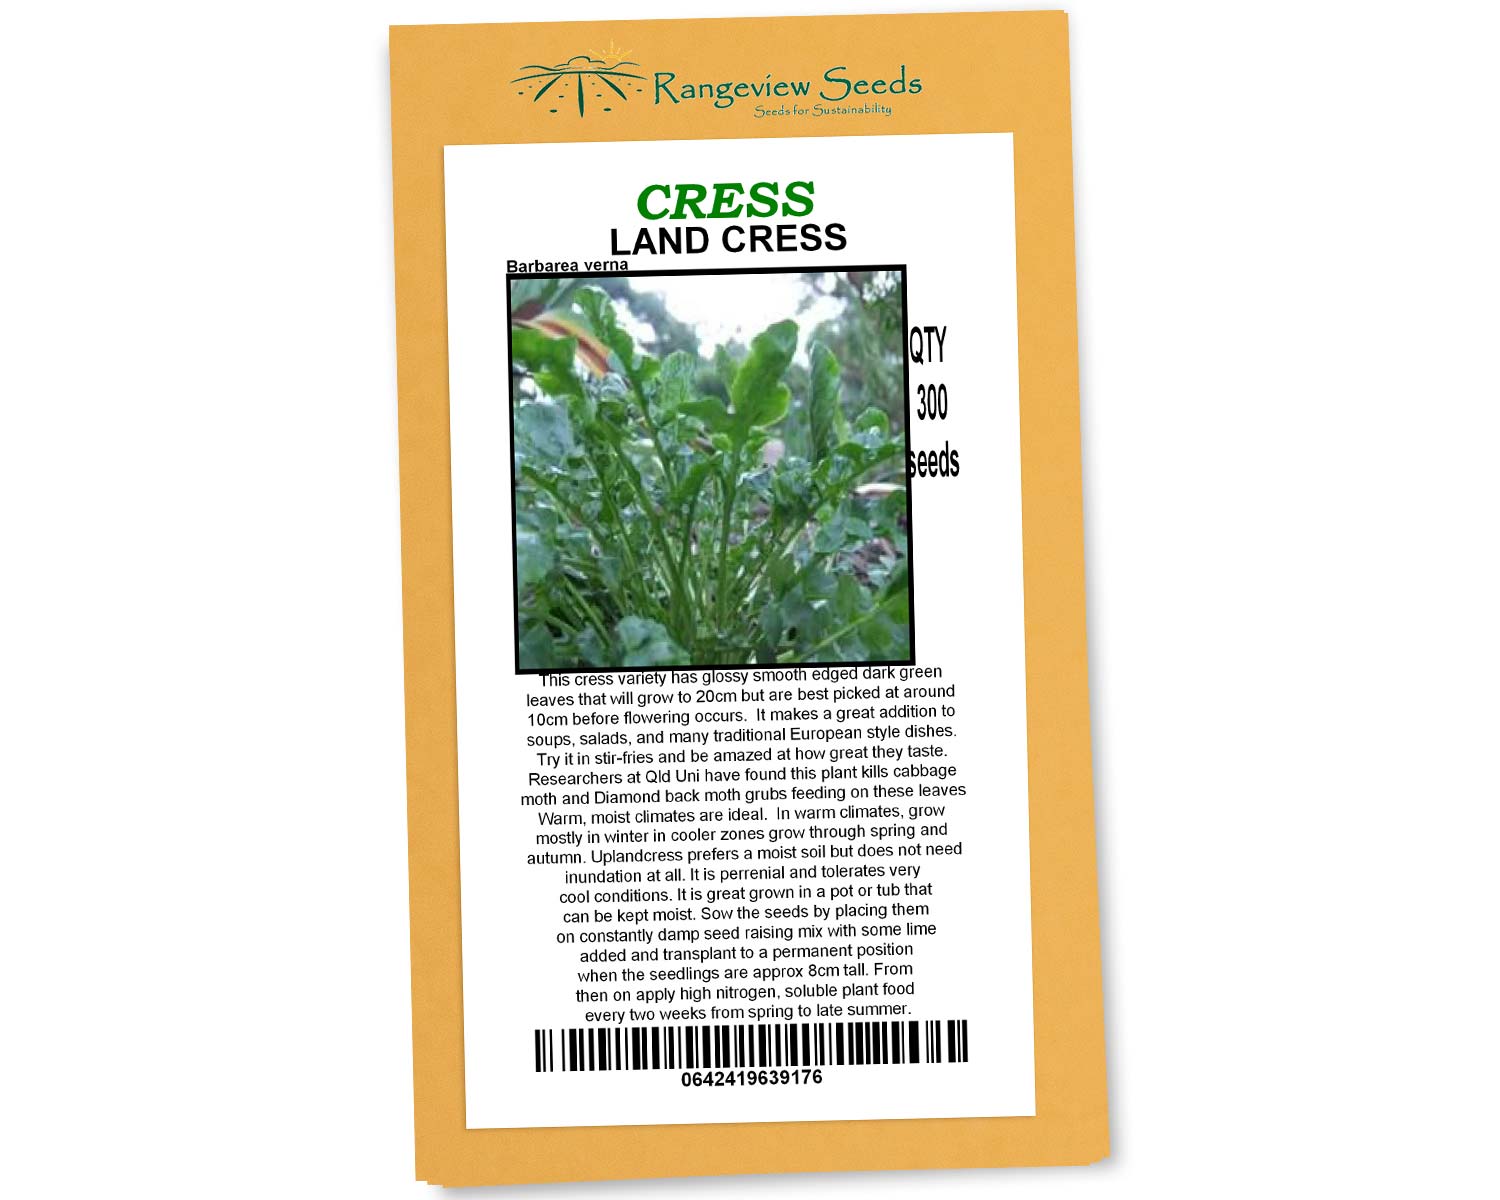 Landcress - Rangeview Seeds